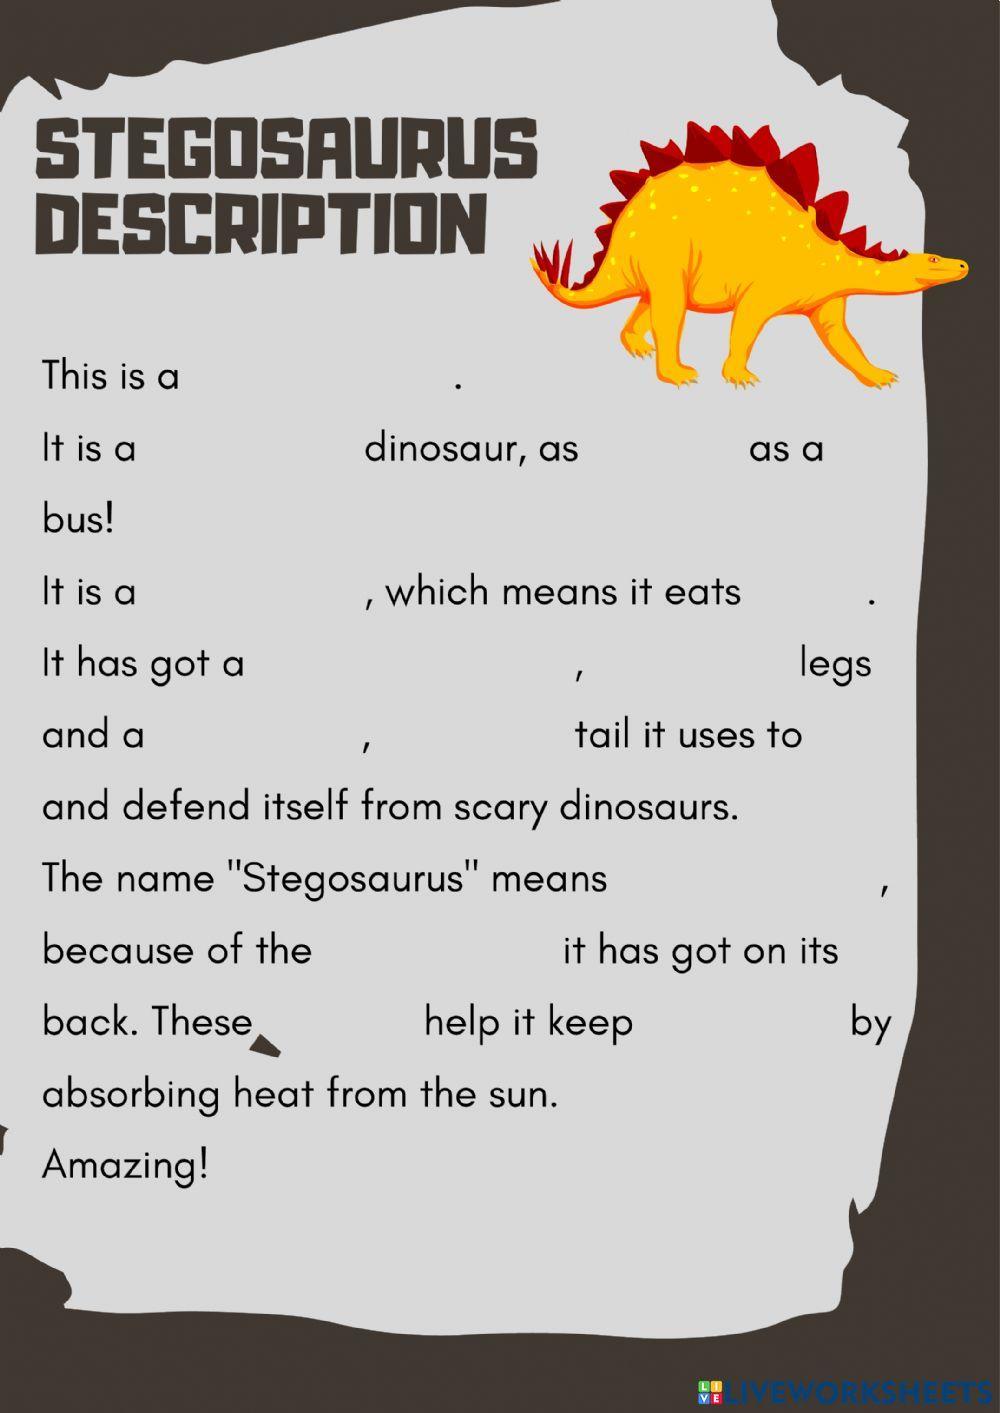 Stegosaurus description